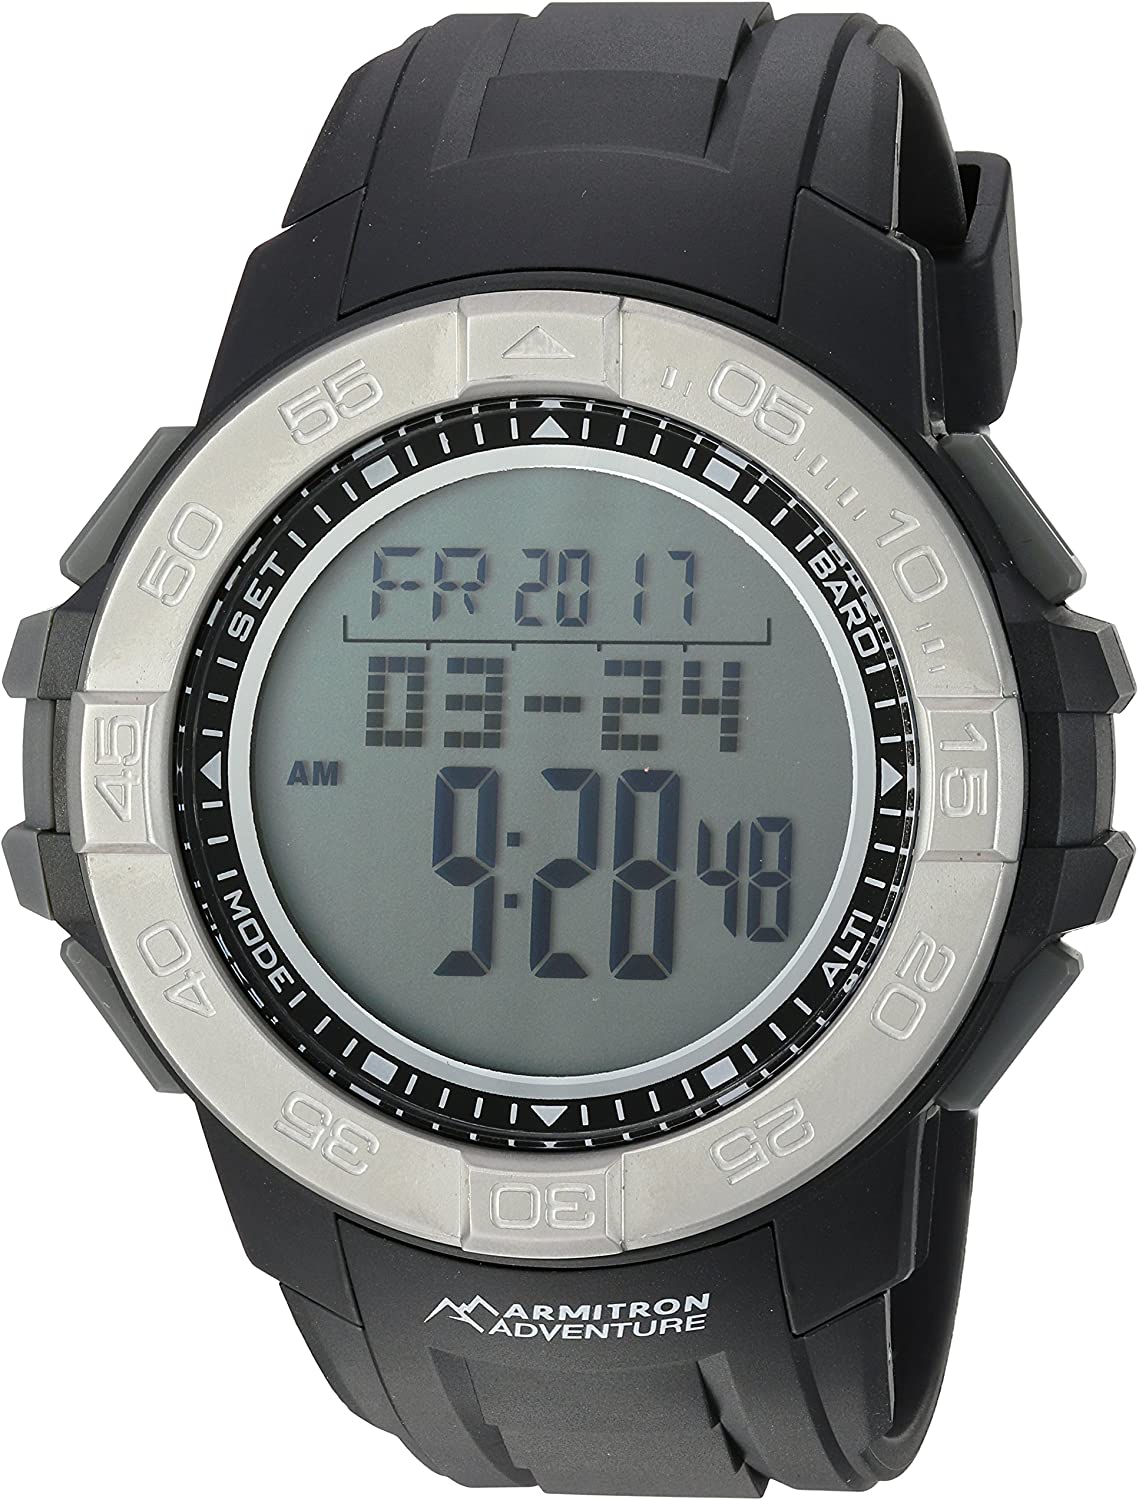 Armitron Adventure MD16389 Series Watch User Manual